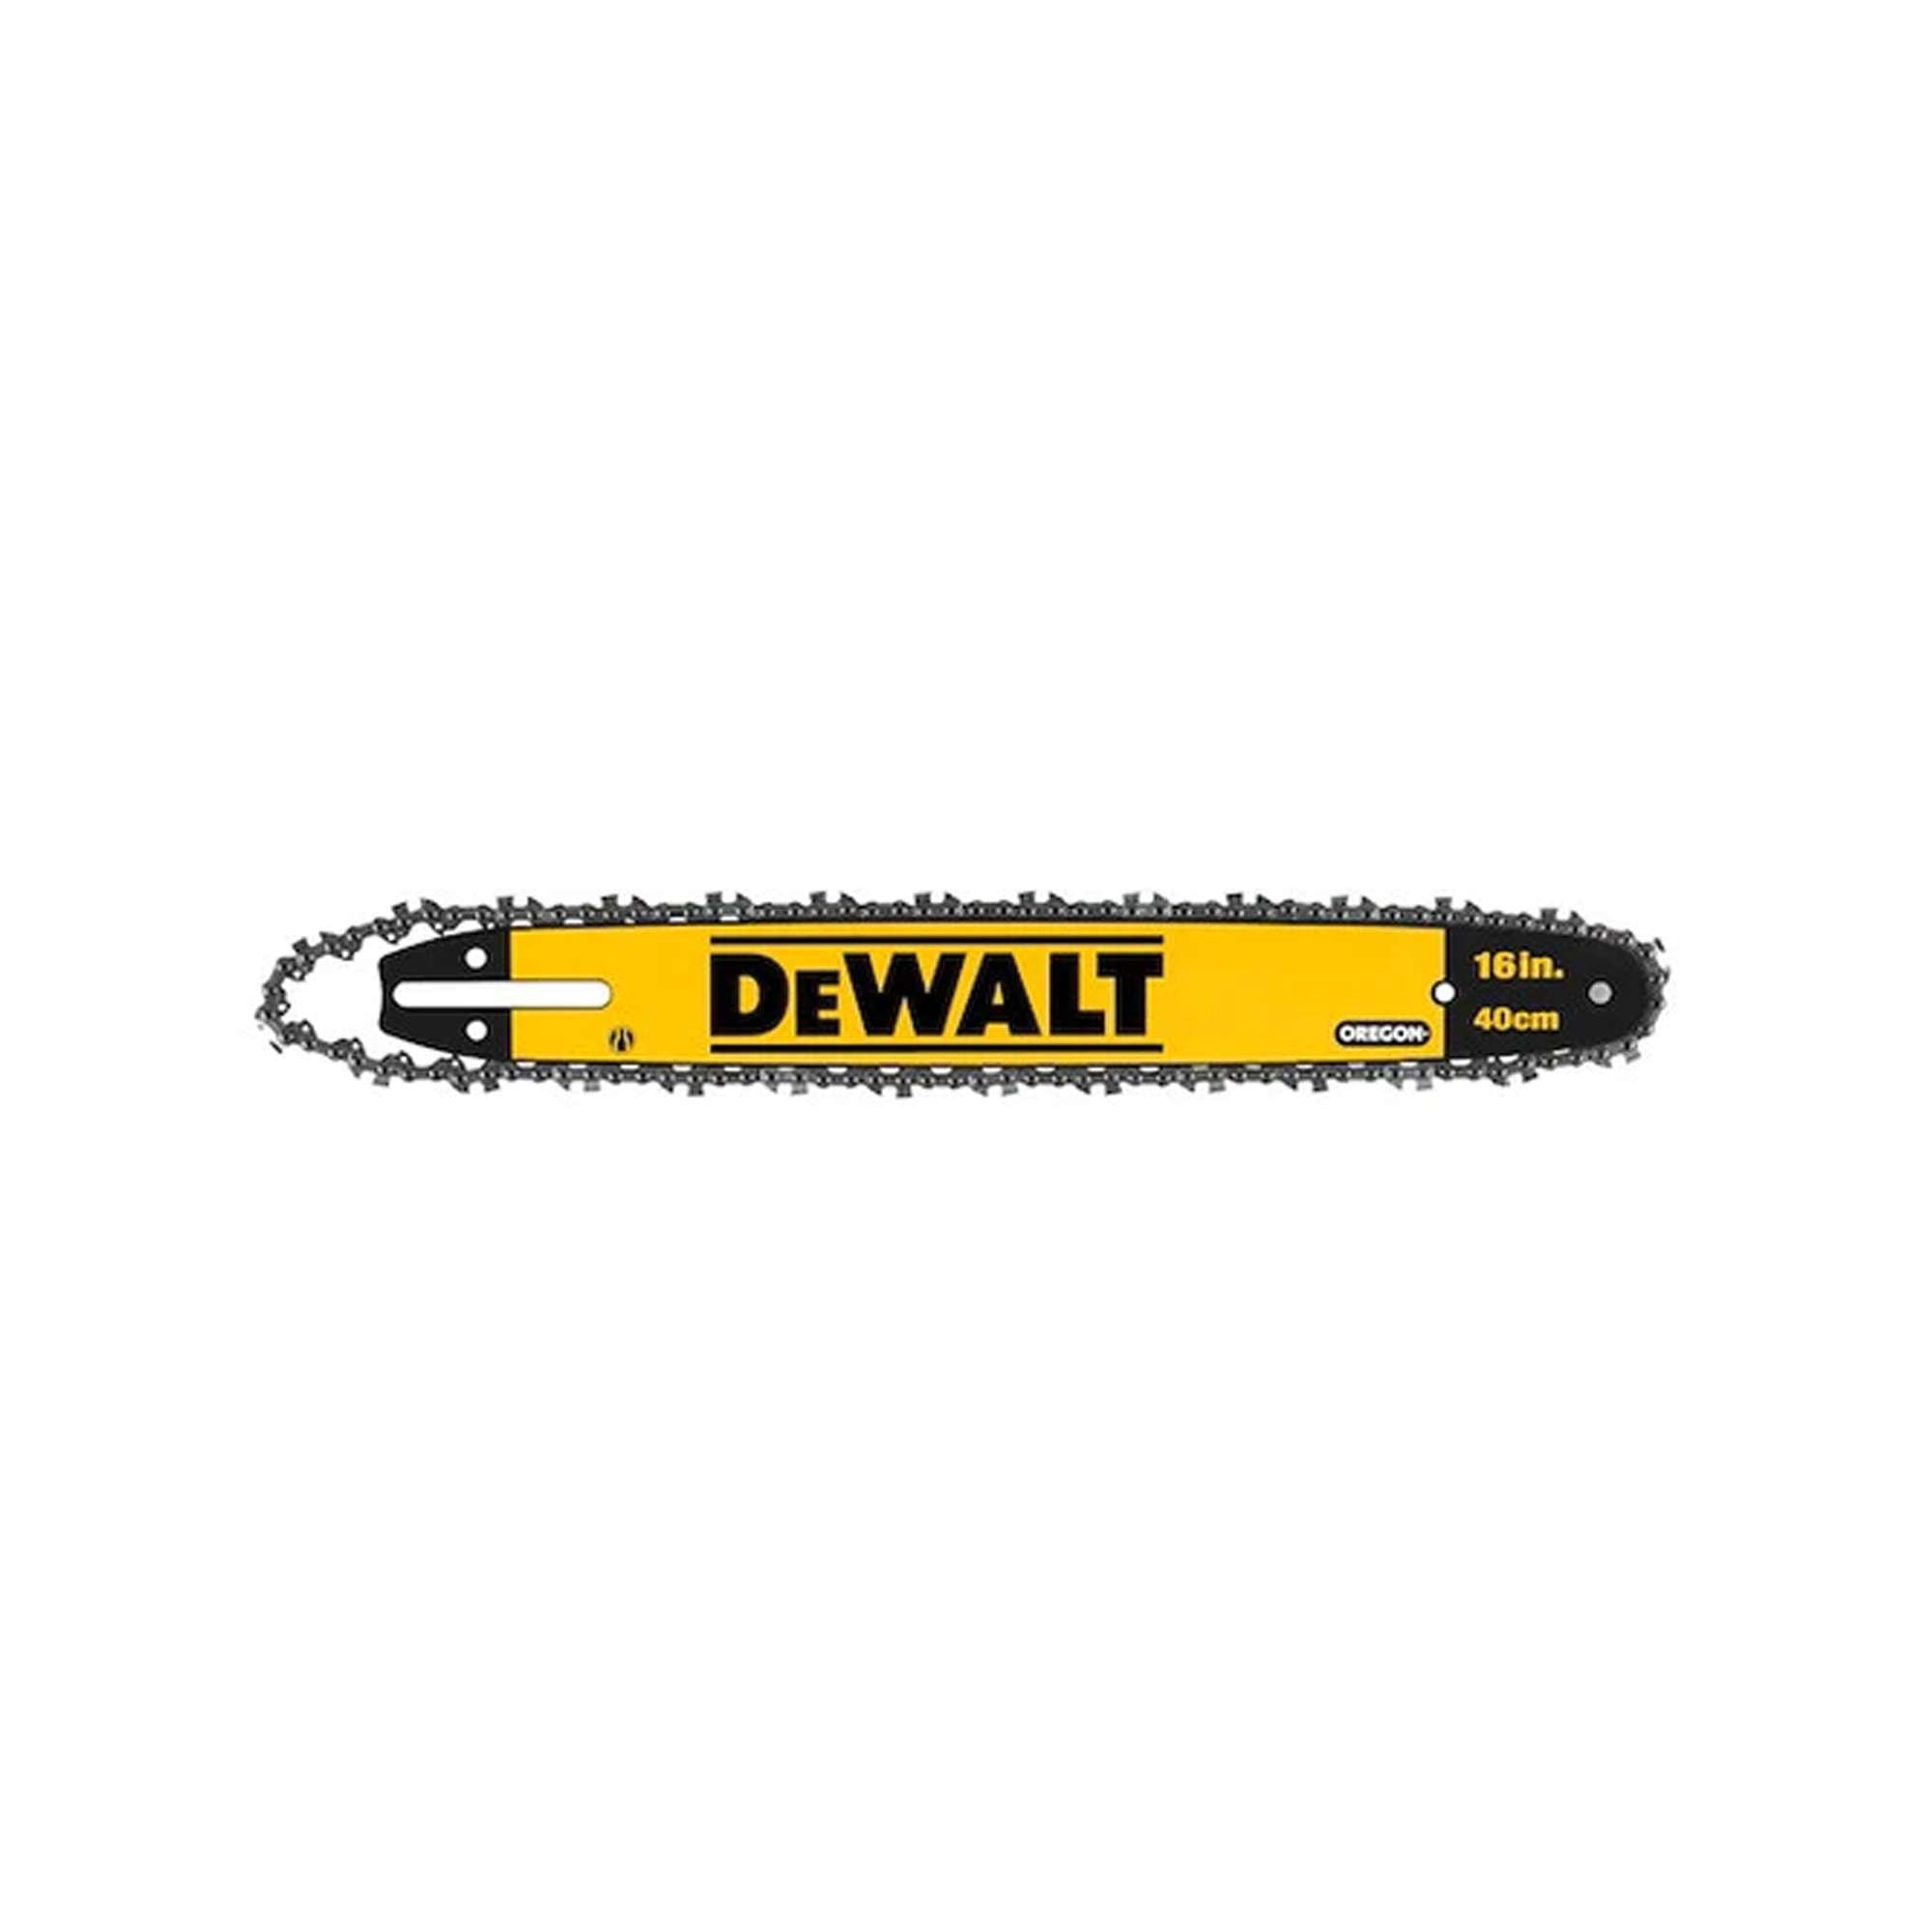 DEWALT DT20660-QZ chain bar kit for chainsaws